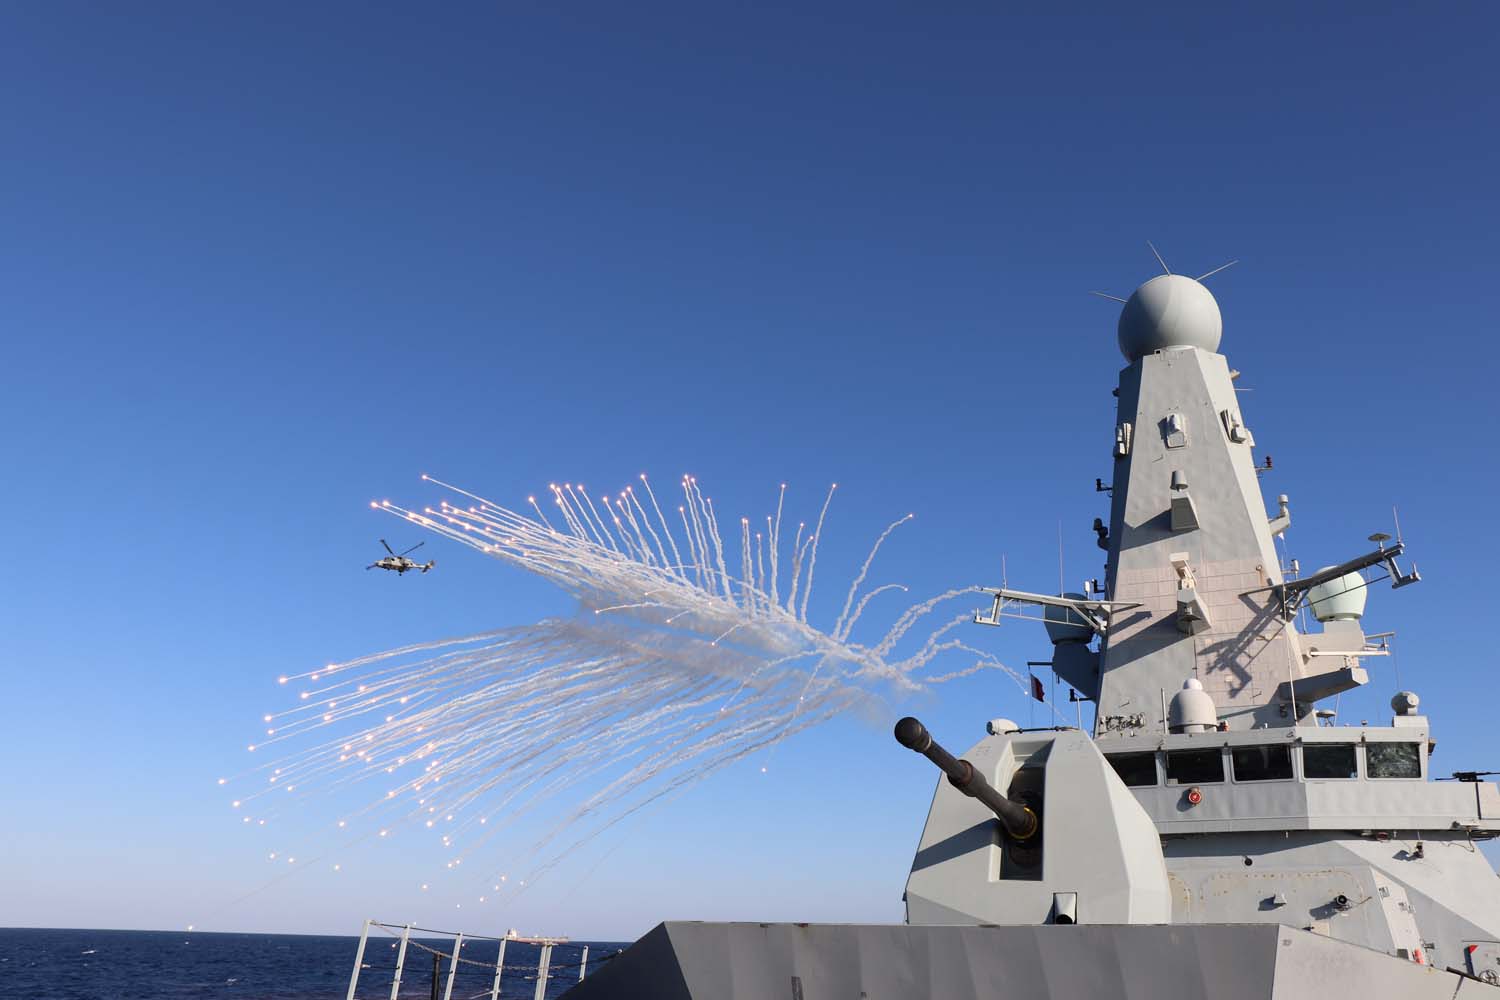 Royal Navy HMS Defender air-defence destroyers